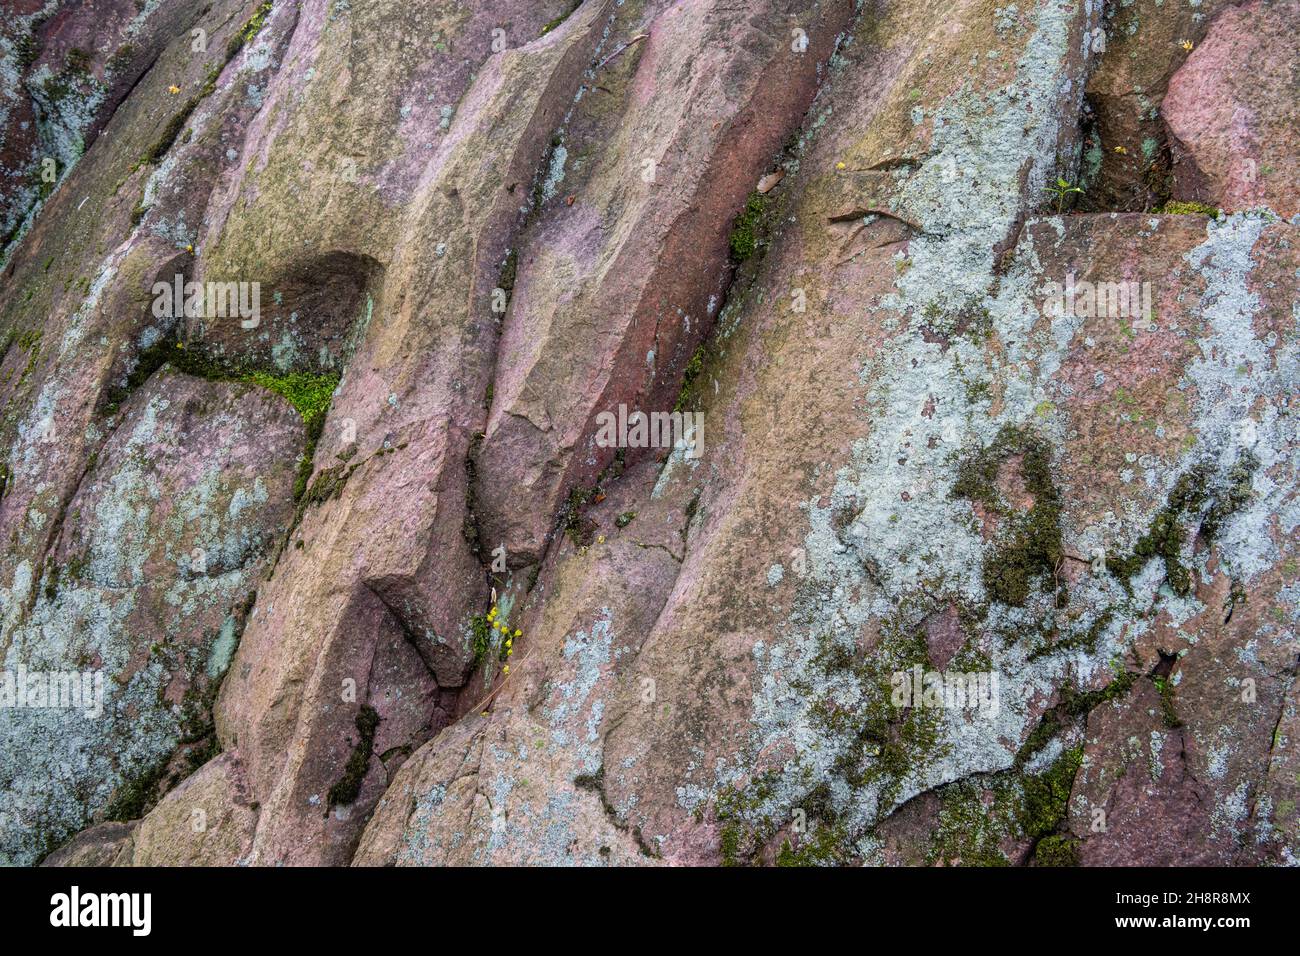 Pre-Cambrian rock outcrops in a pine forest, Killarney Provincial Park, Killarney, Ontario, Canada Stock Photo